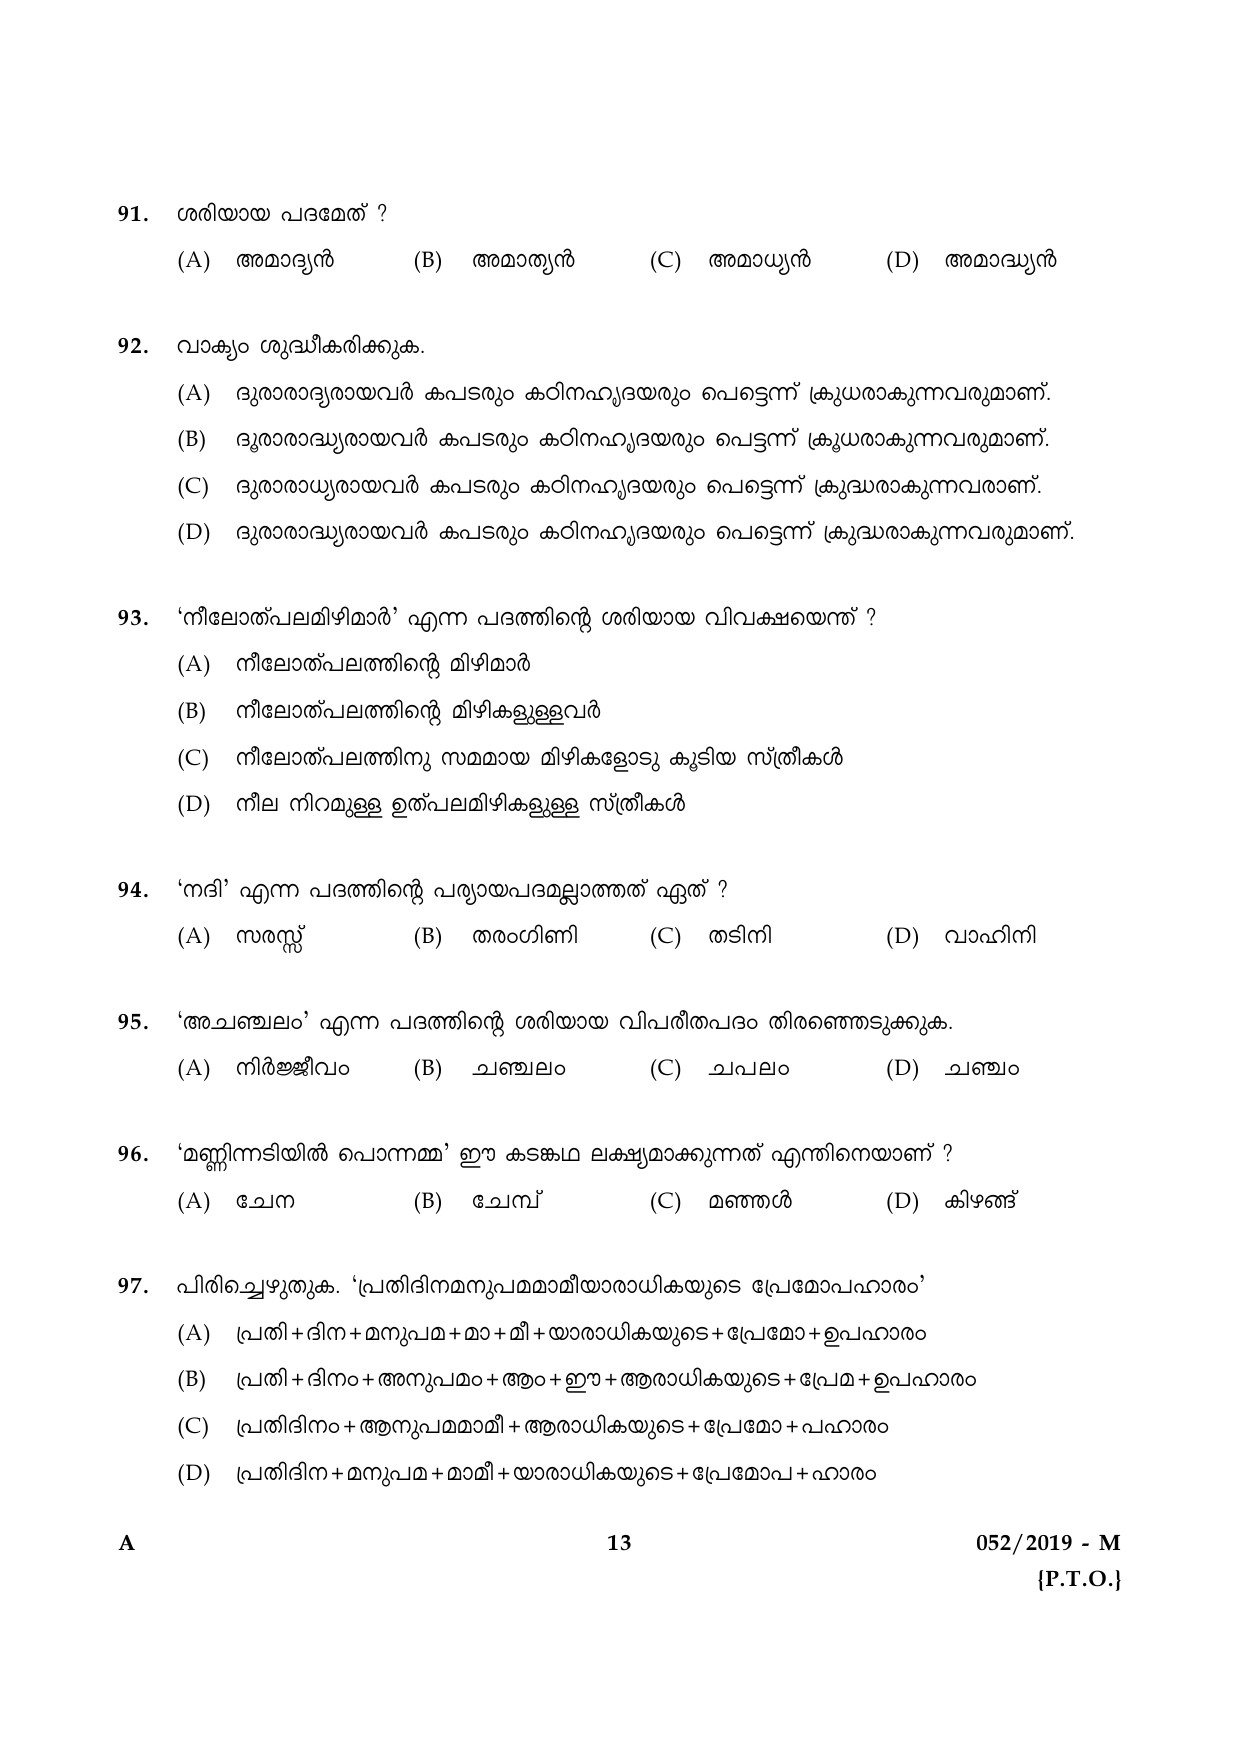 Village Extension Officer Grade II Exam Paper 2019 Code 522019 M 12